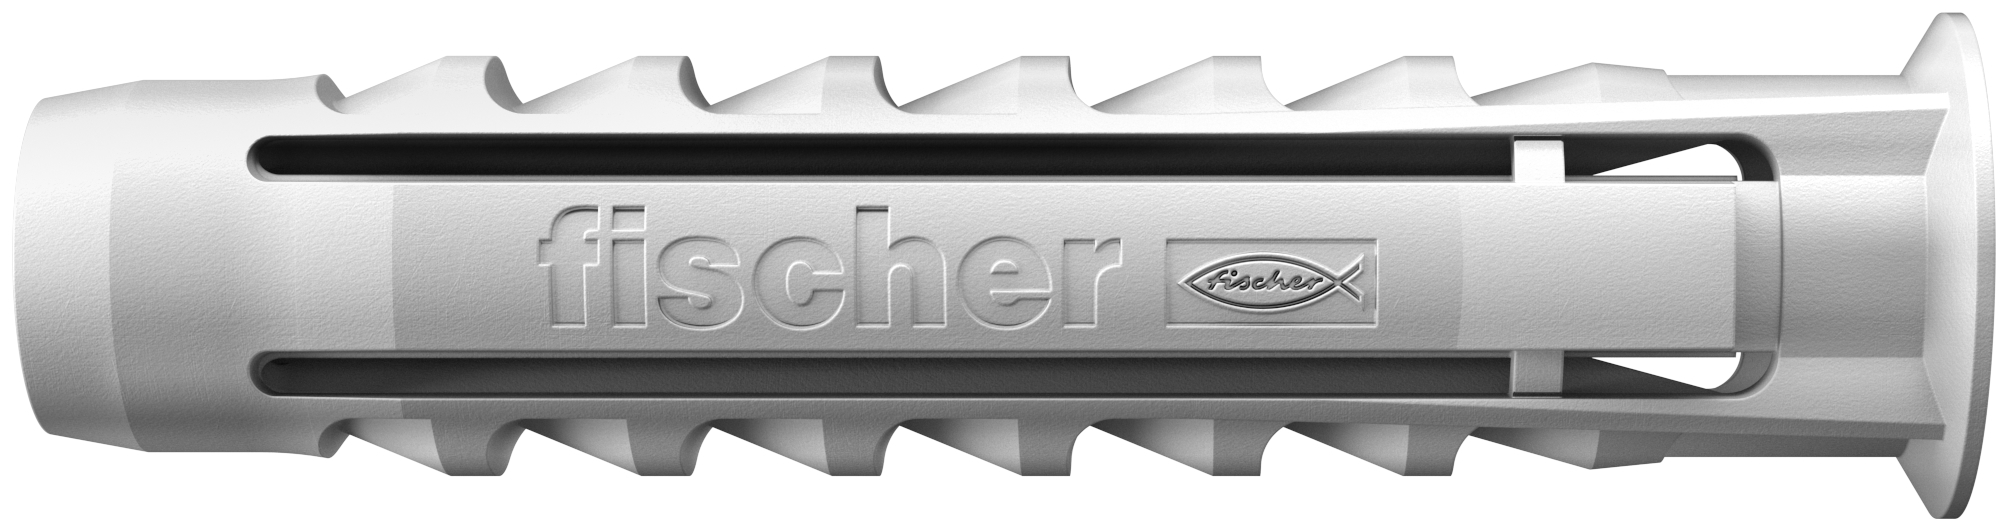 fischer Big Pack Tasselli SX 8 (120 Tasselli) (120 Pz.) Busta di tasselli formato convenienza fie2772